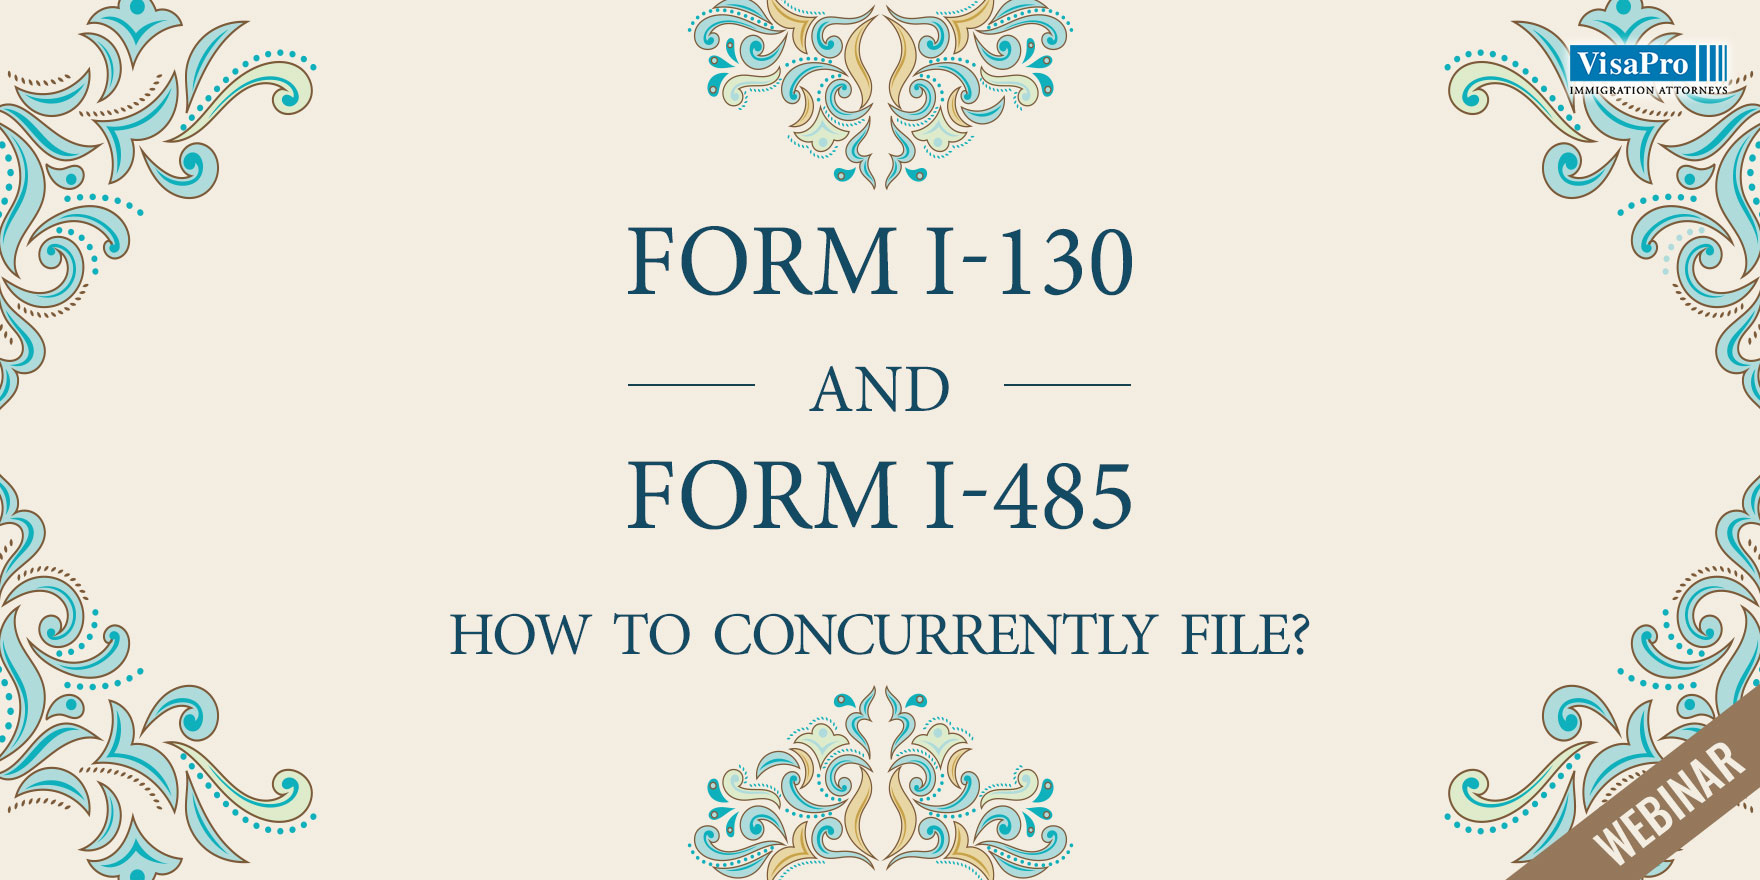 Immigration Webinar: How To Concurrently File FORM I-130 & FORM I-485, Kingston, Jamaica